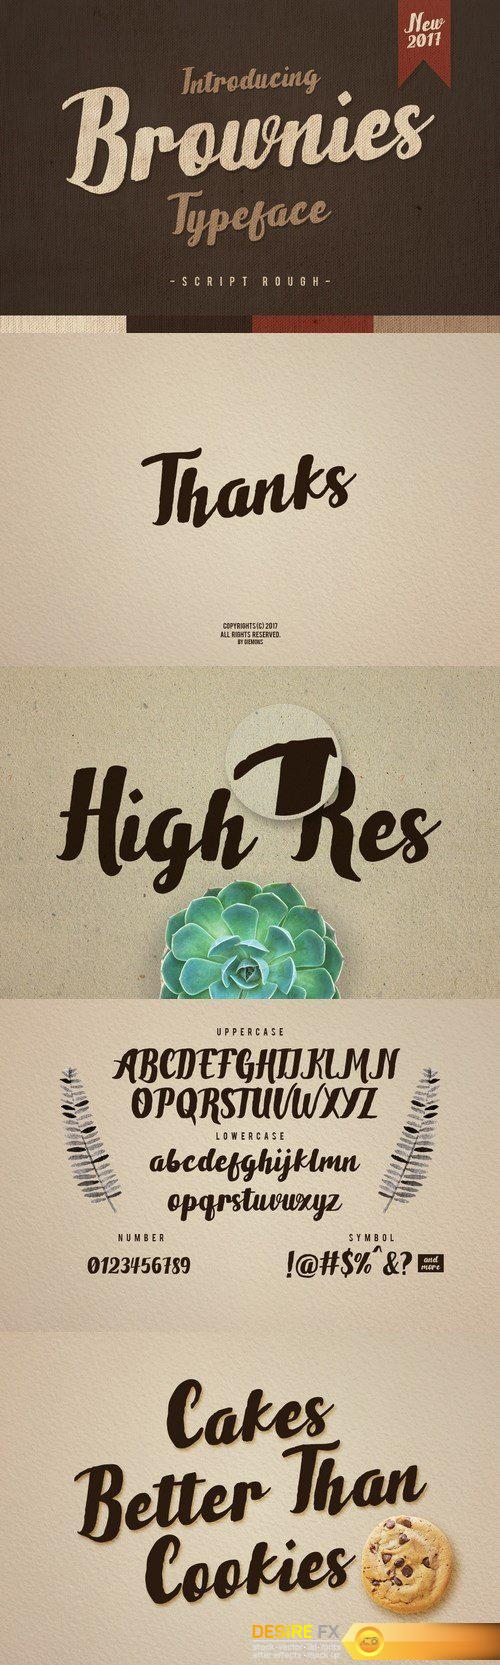 Fontbundles - Brownies Typeface 40027